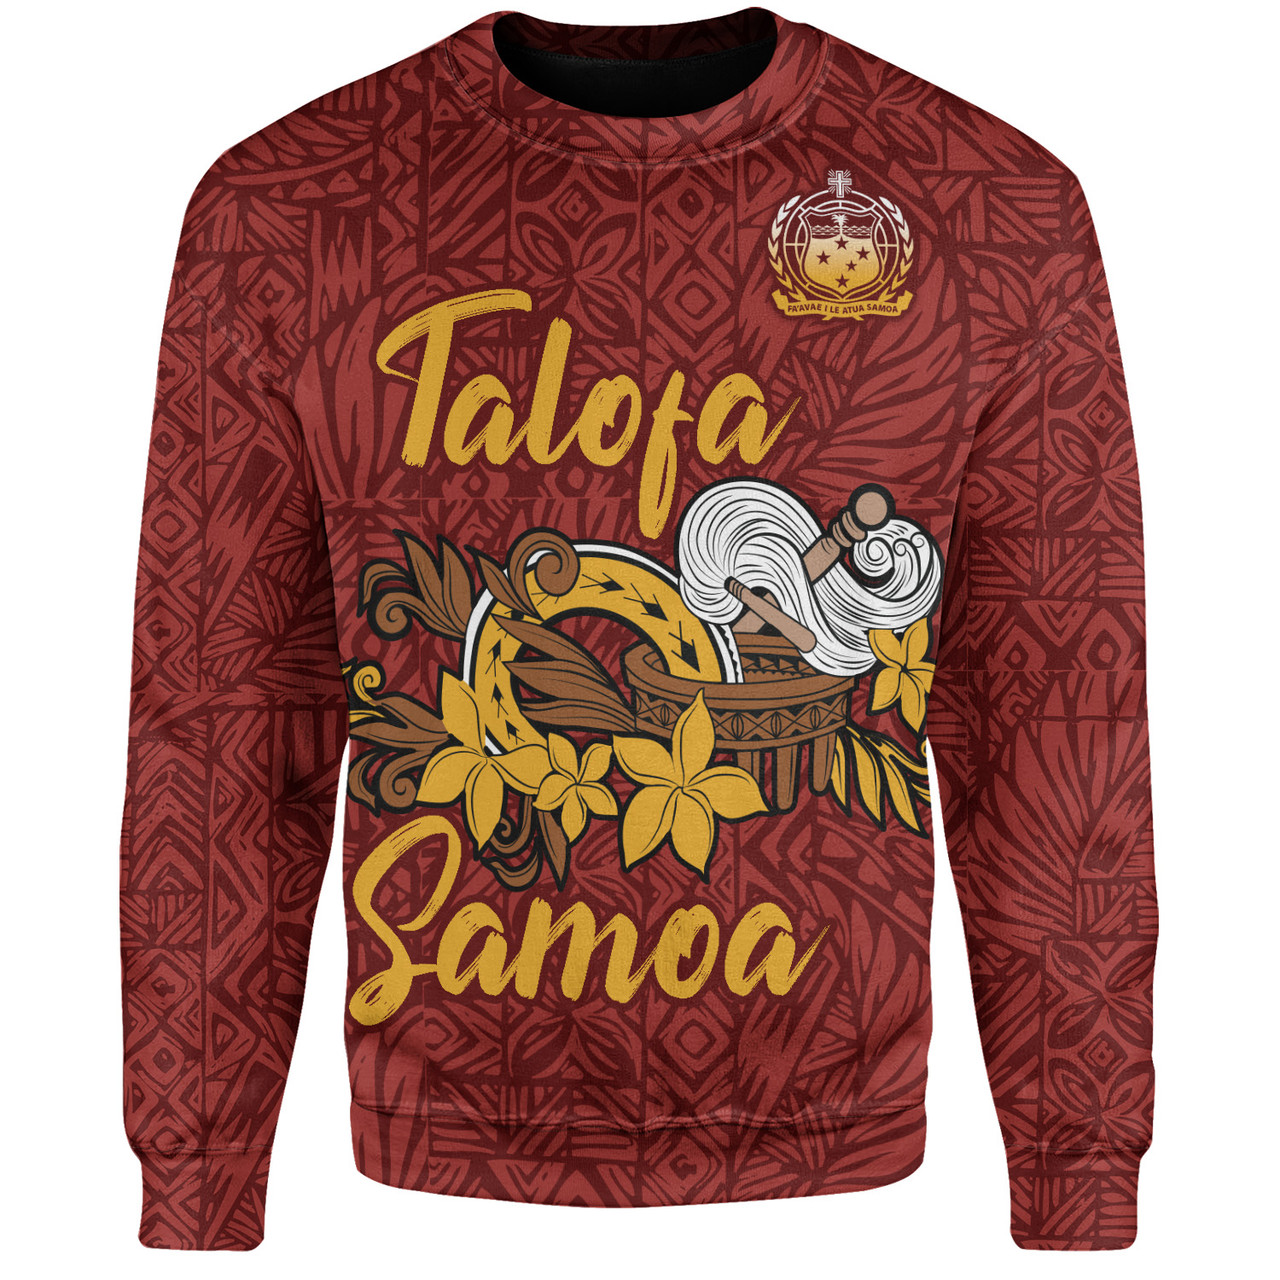 Samoa Sweatshirt Talofa Samoa Style